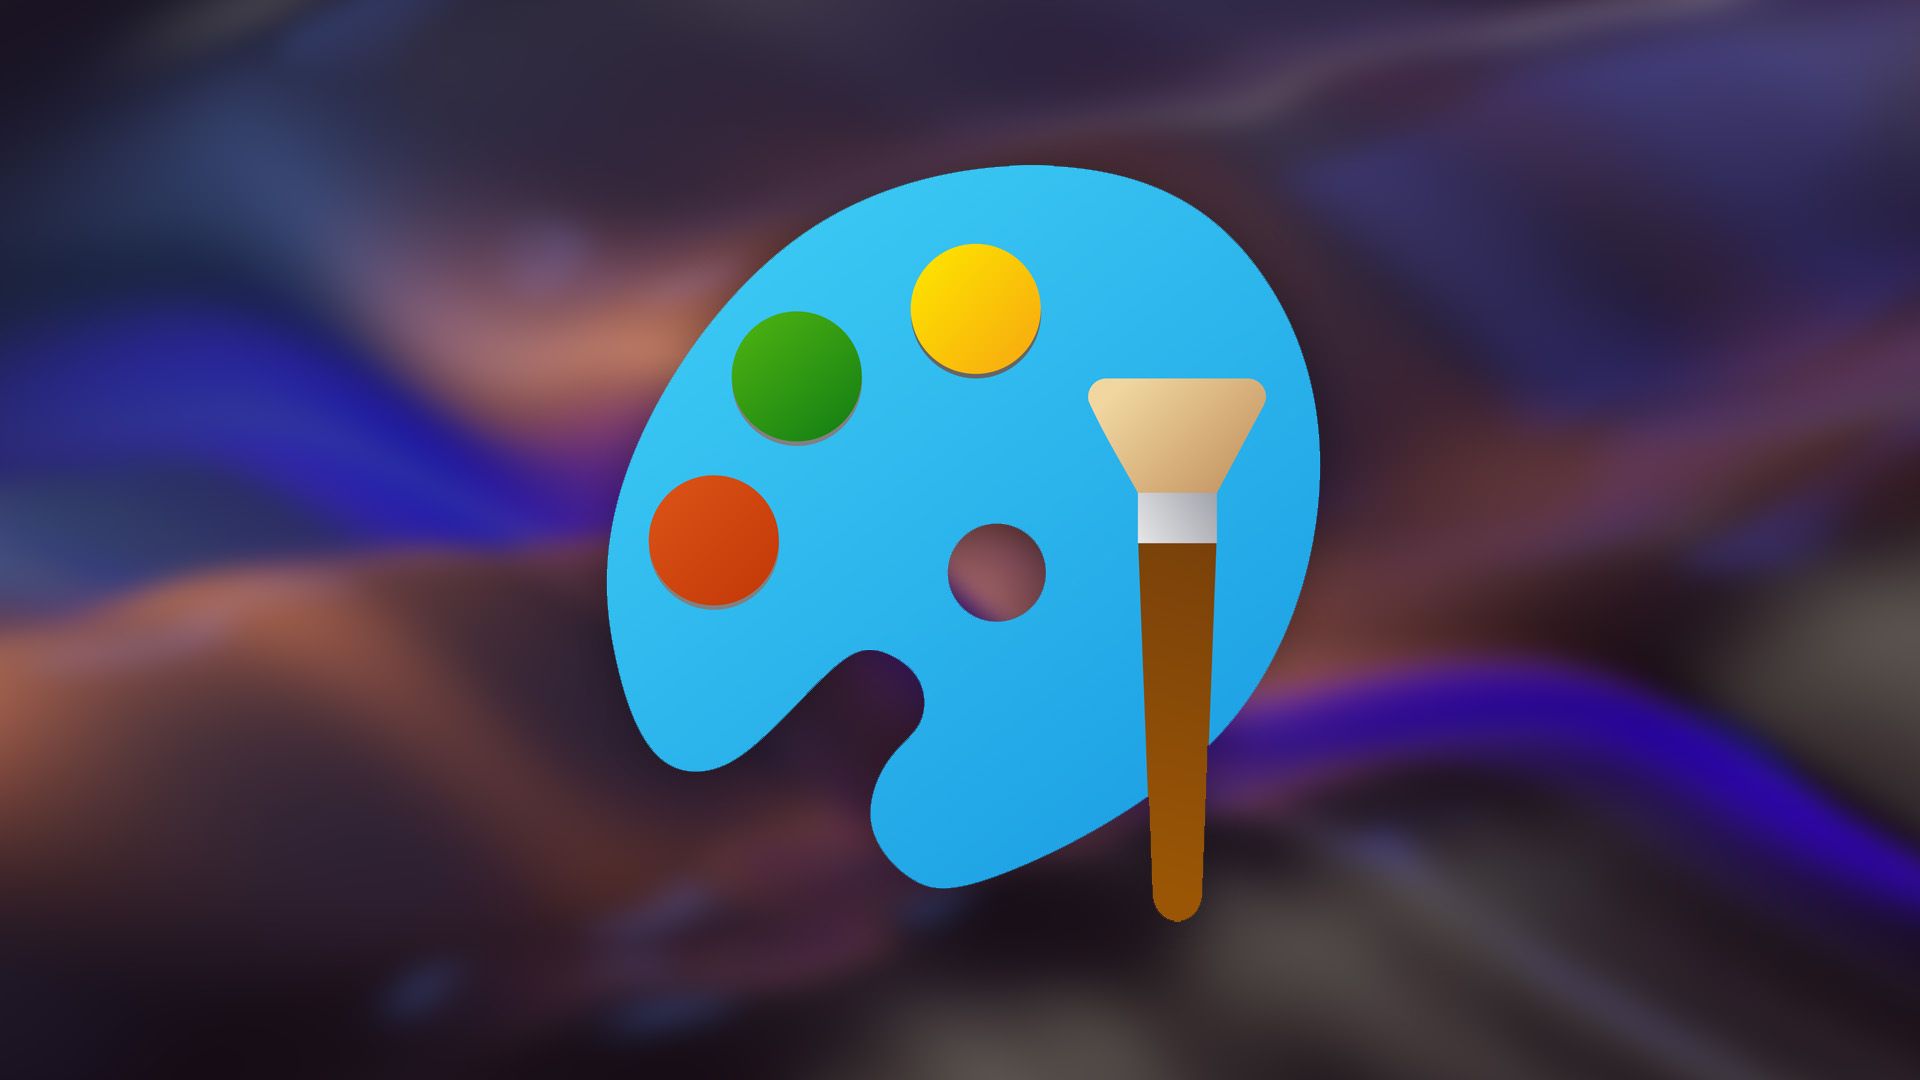 Microsoft Paint logo